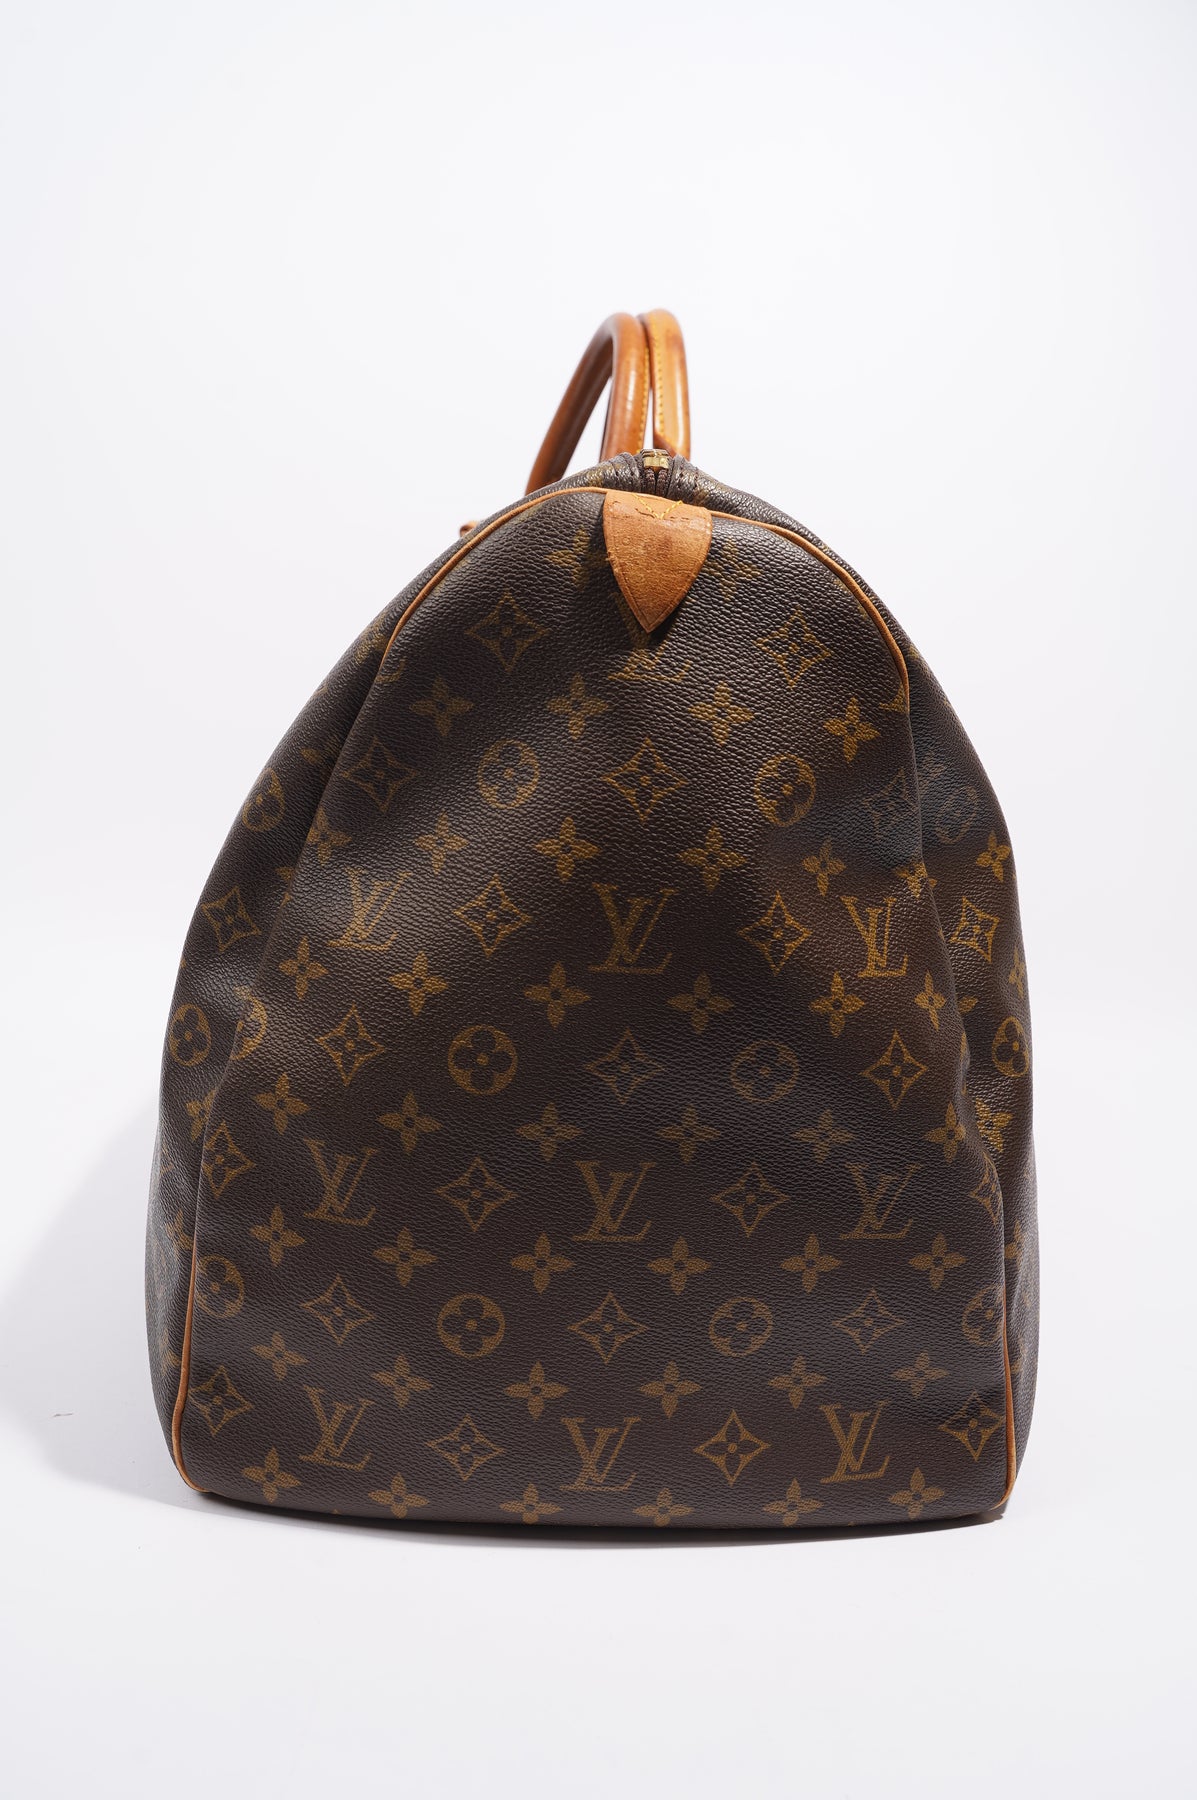 Louis Vuitton Monogram Canvas Keepall 40 Speedy Duffle Bag